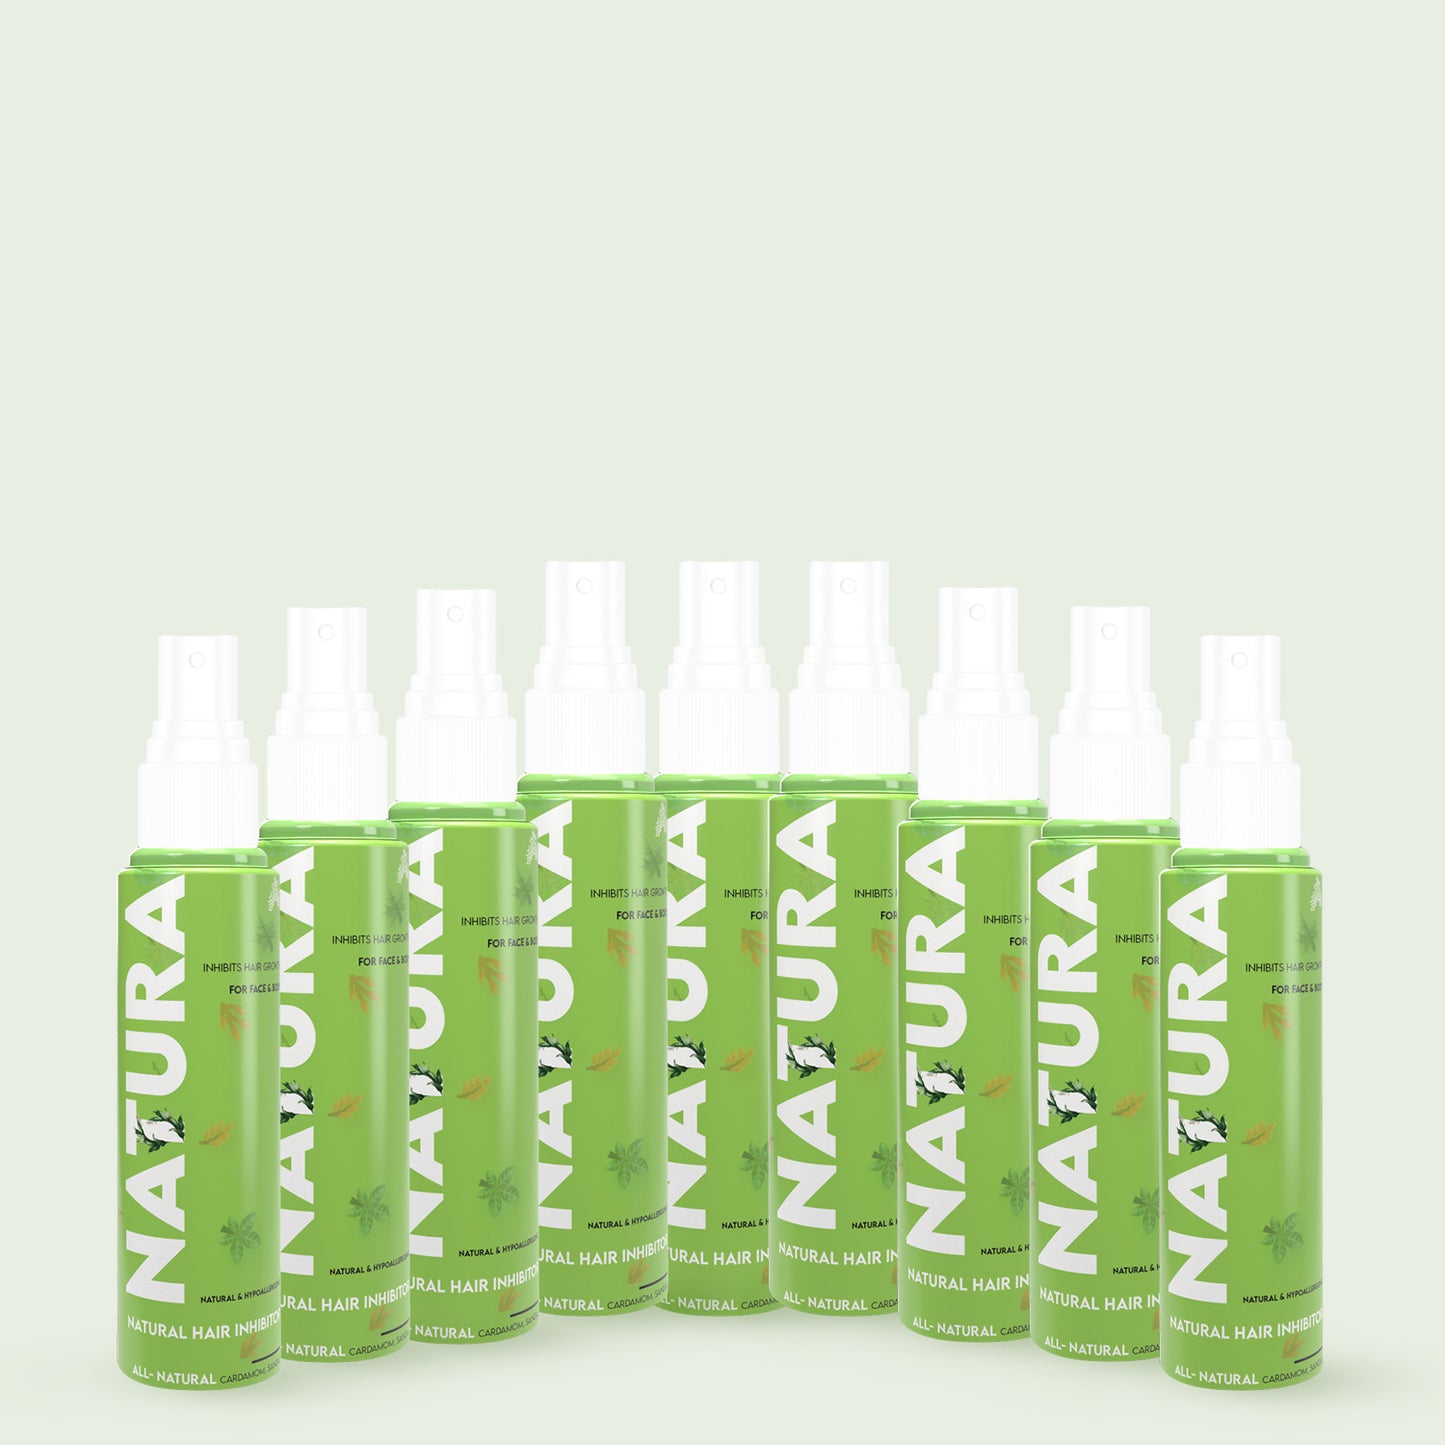 12 hair removal spray bottles for permanent full body hair removal